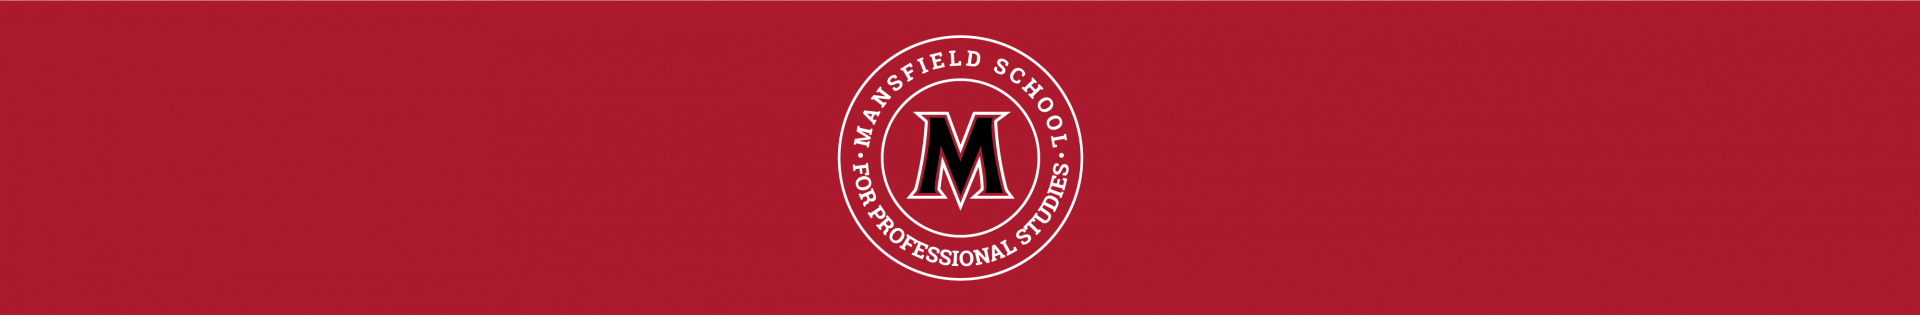 Mansfield School for Professional Studies